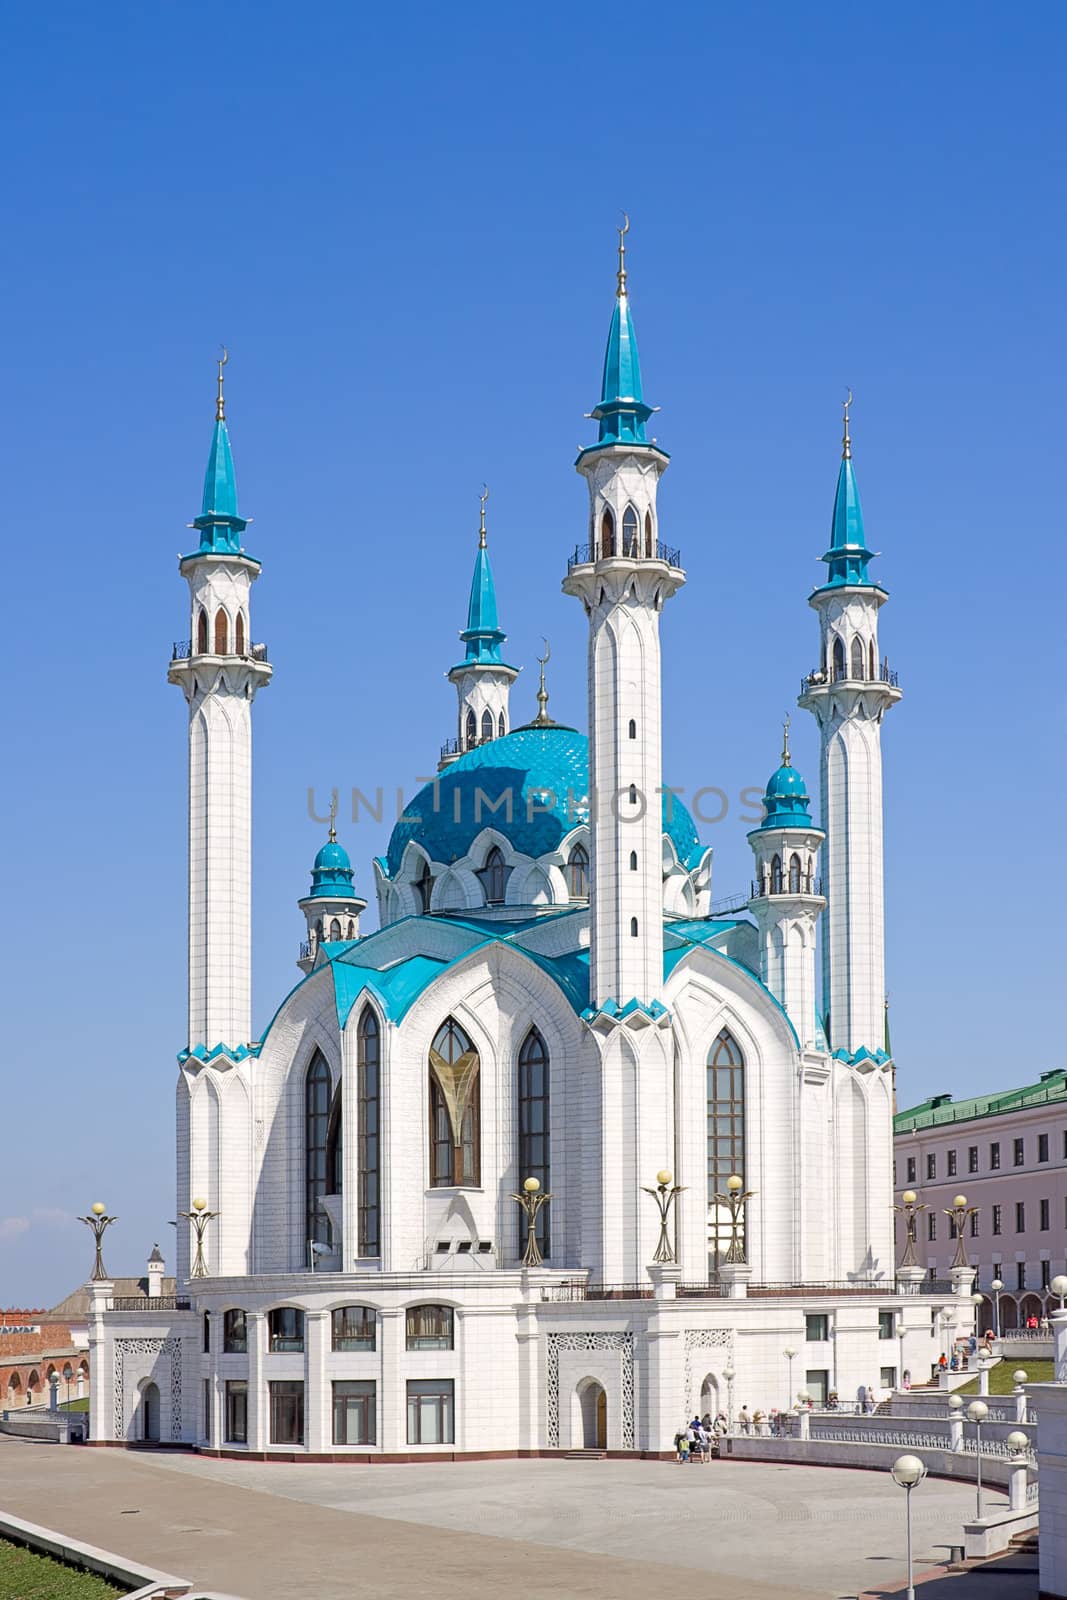 View of the beautiful Qolsharif Mosque in the Kremlin, Kazan, Russia.